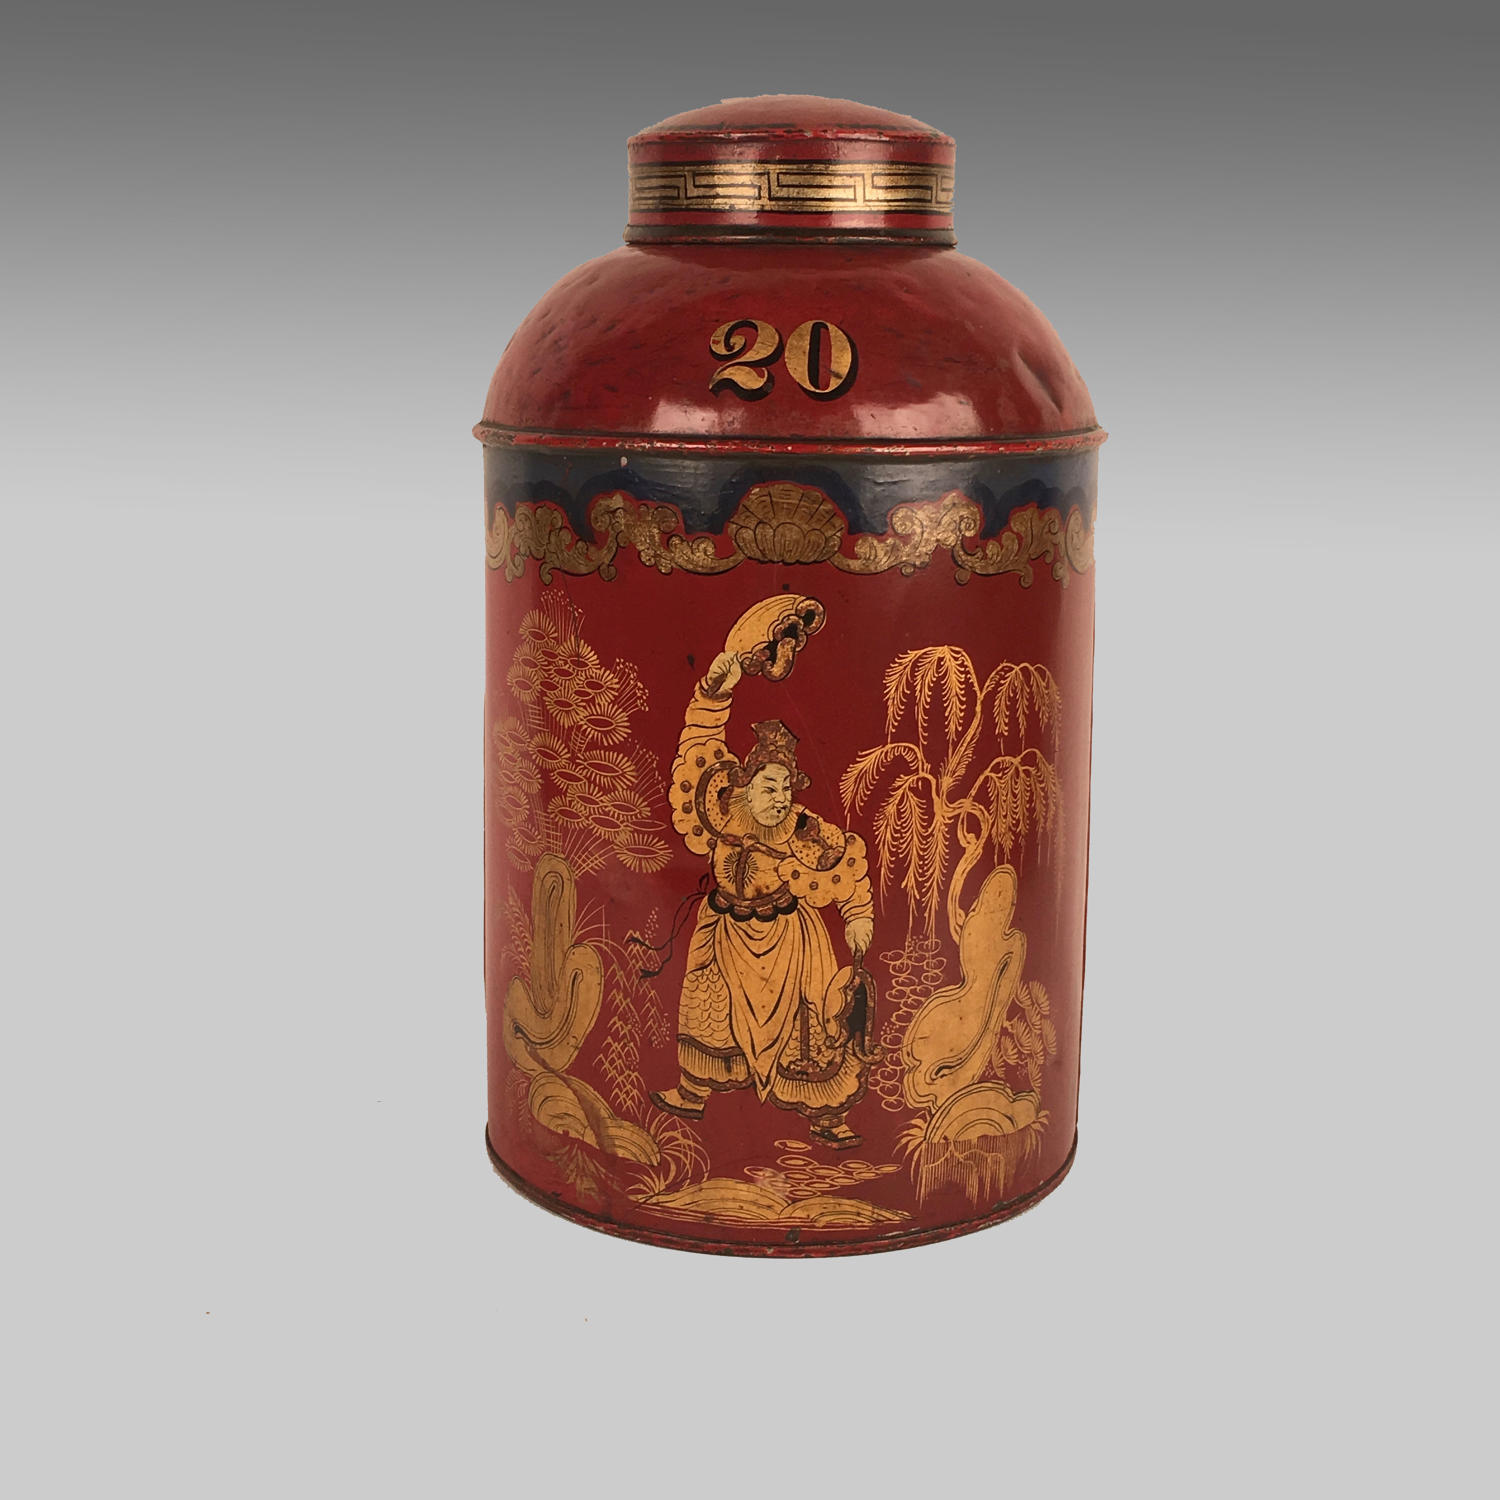 Antique 19th century tea canister